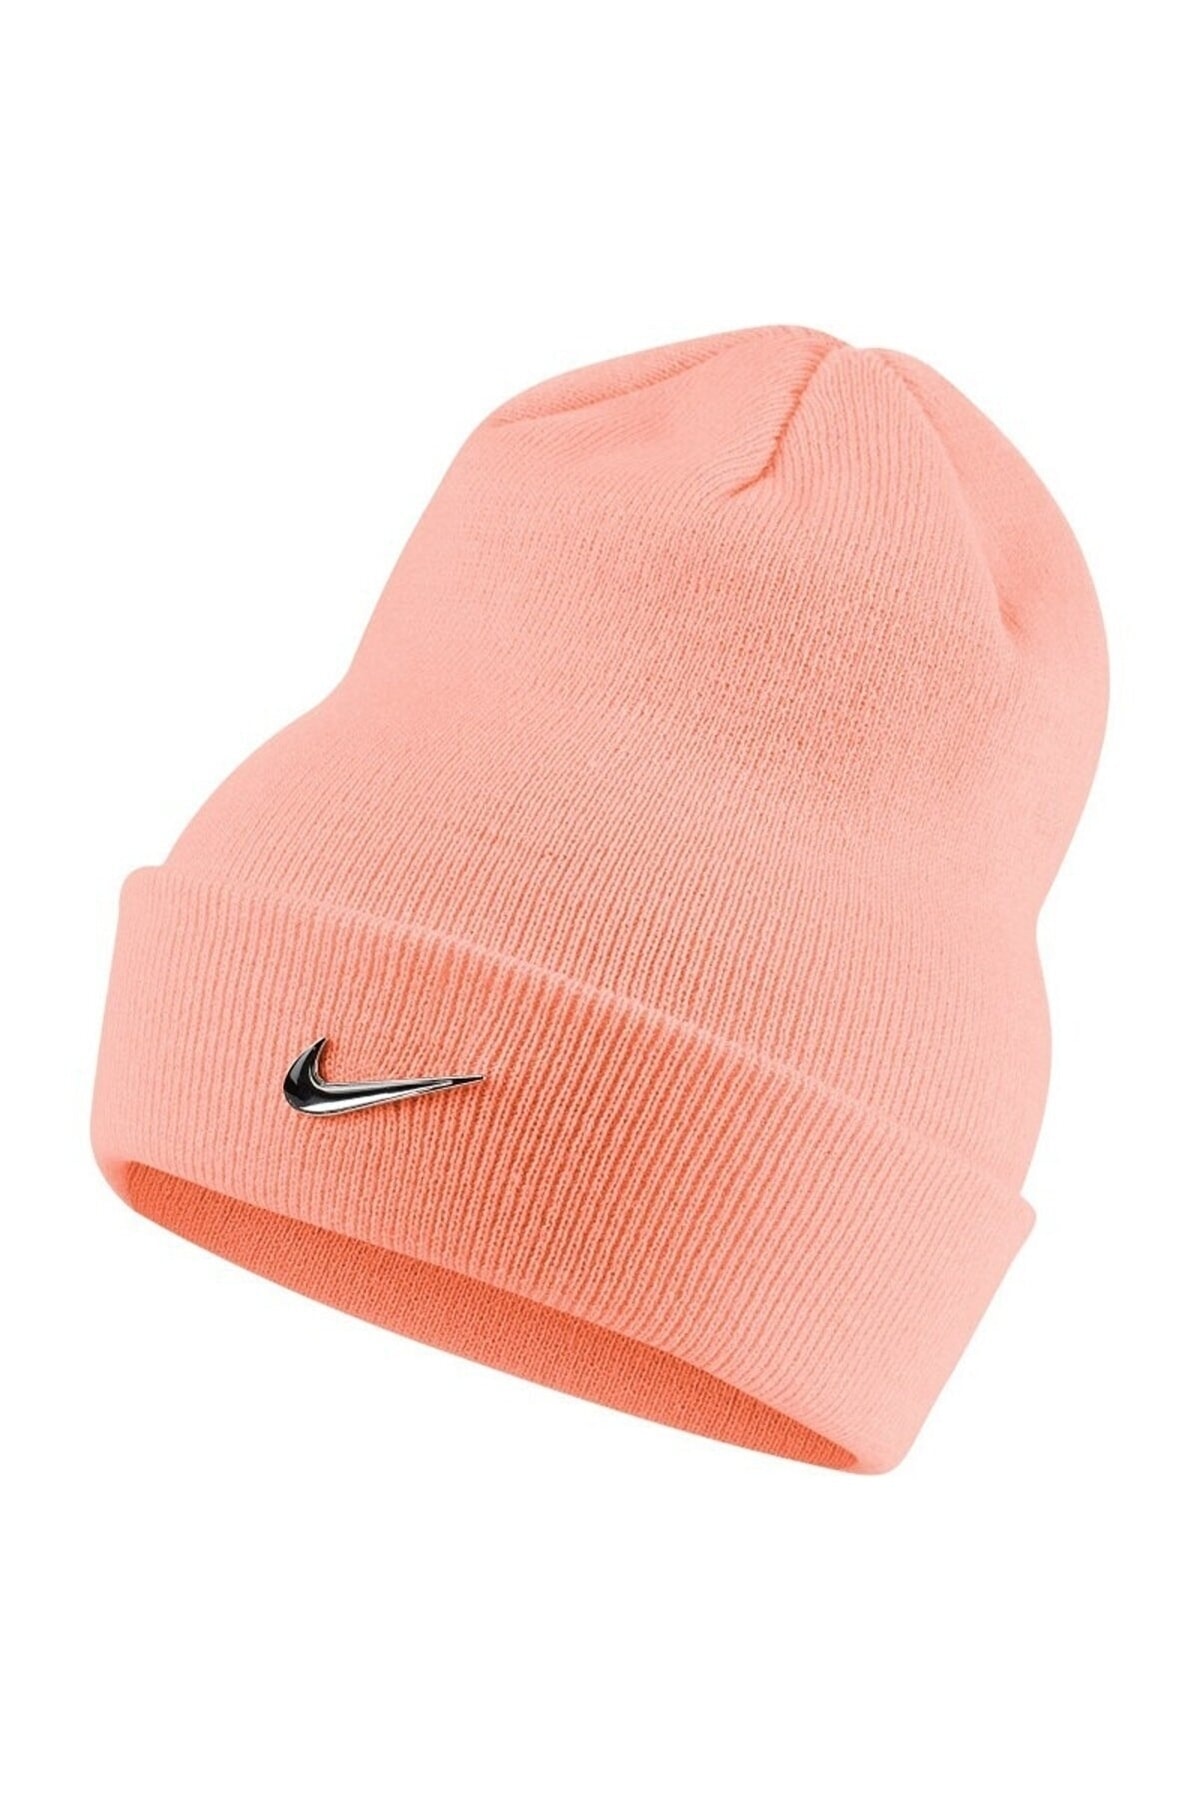 Nike کلاه زنانه Beanie Metal Swoosh - Pink Da1997 697